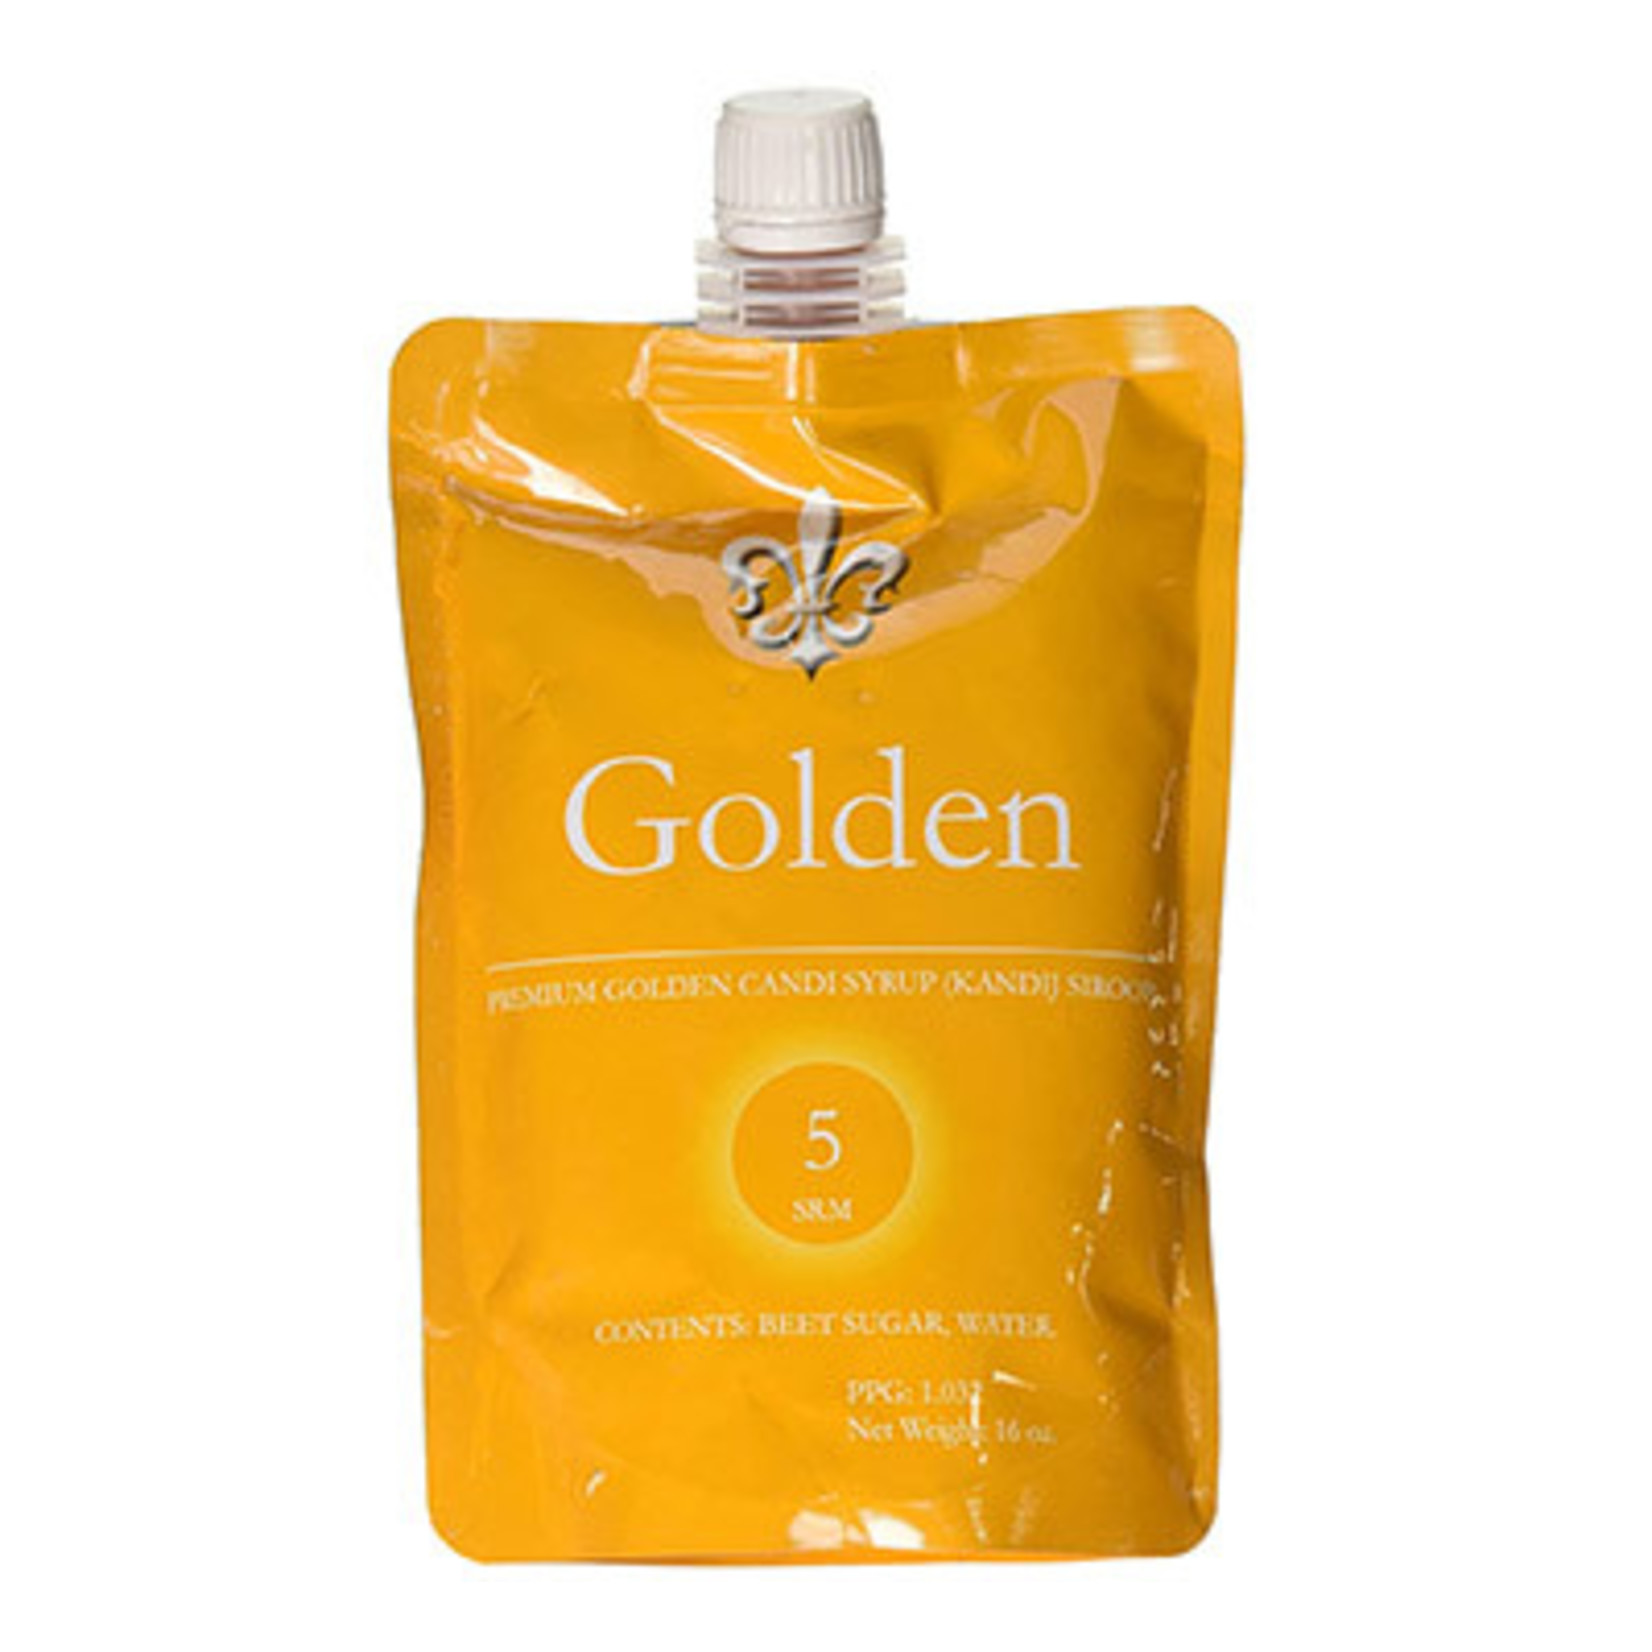 Golden 5 Belgian Candi Syrup 1lb